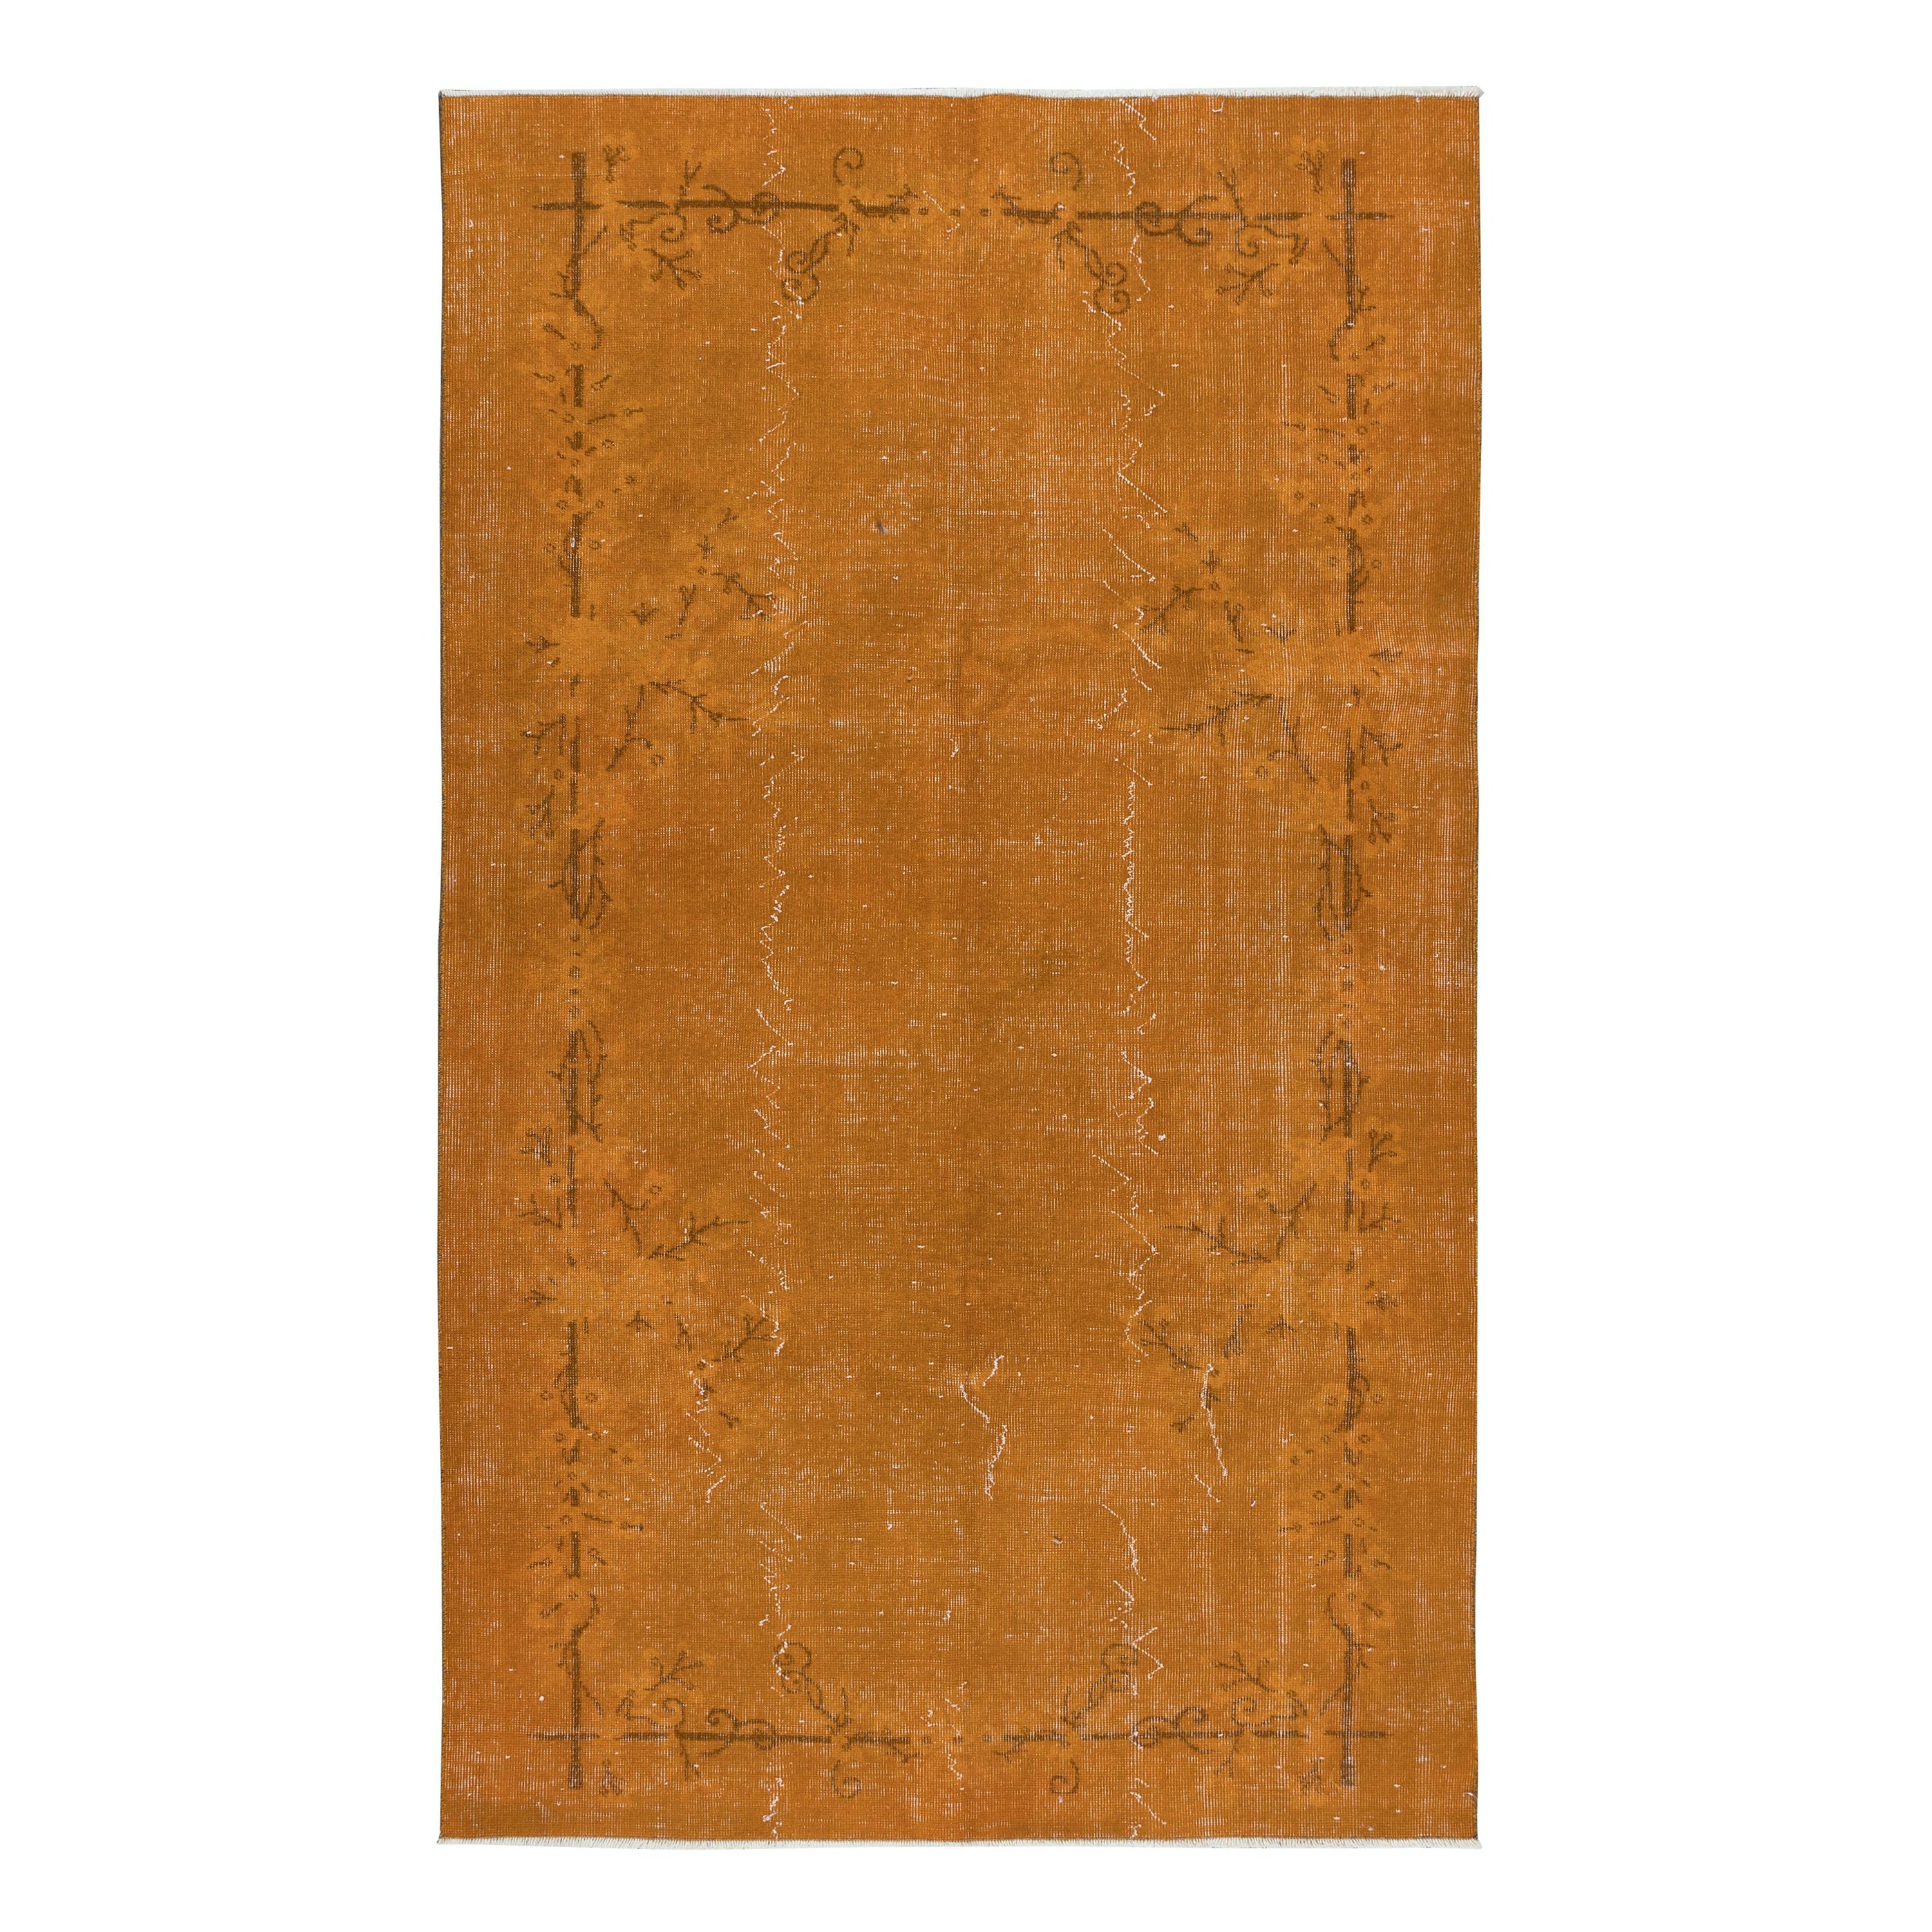 4.8x7.8 Ft Art Deco Inspired Handmade Orange Wool Area Rug for Modern InteriorS For Sale